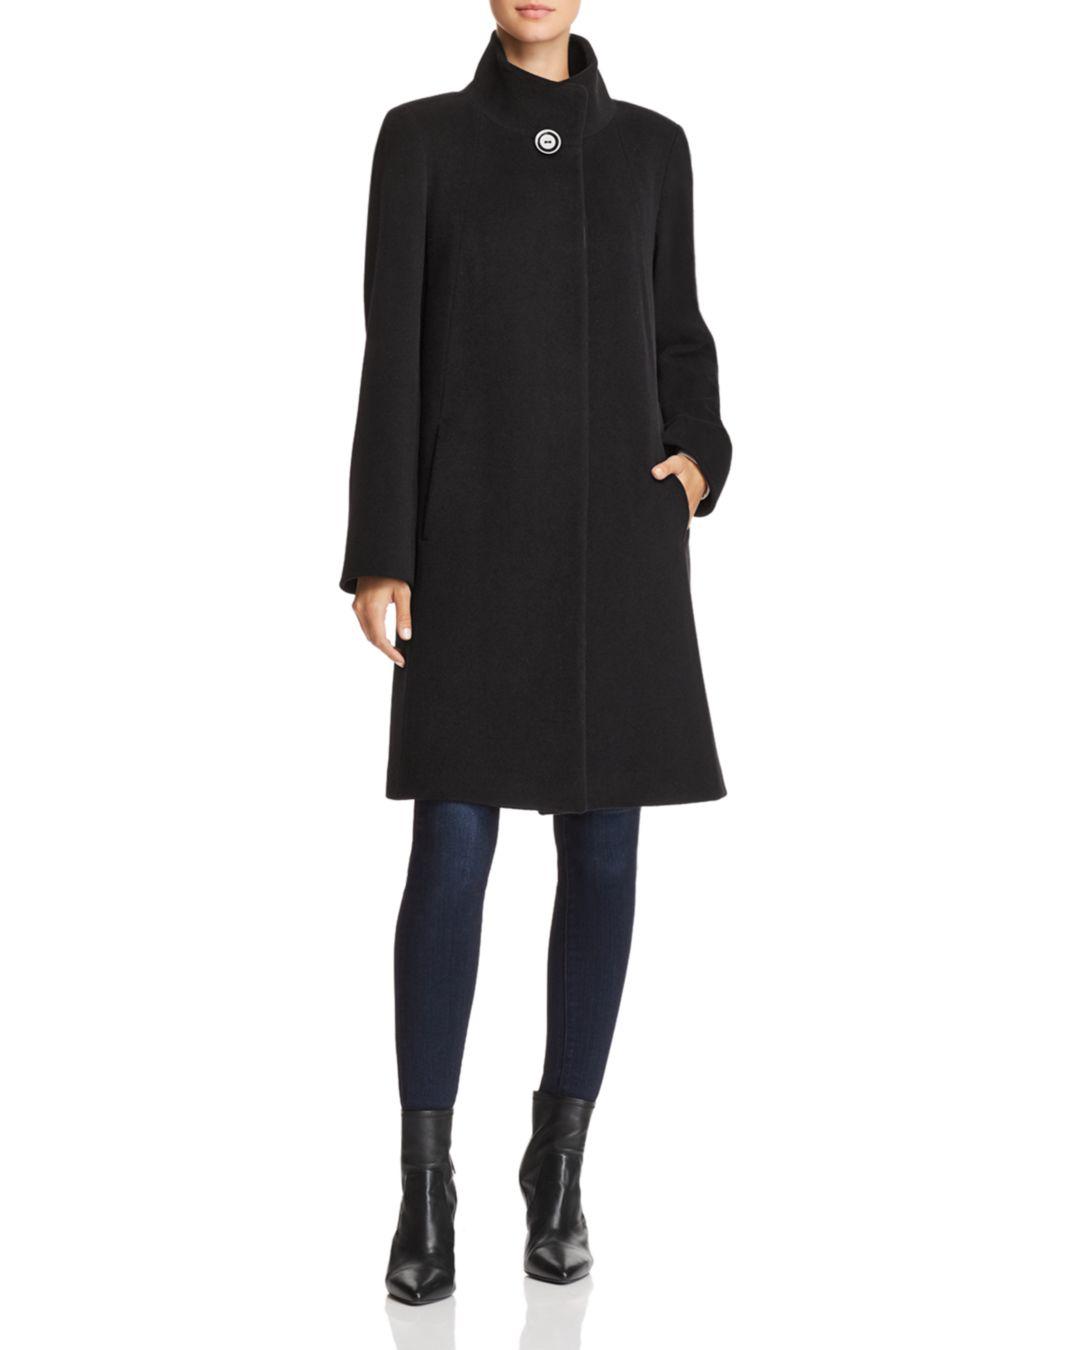 Cinzia Rocca Wool & Cashmere Coat in Black - Save 46% - Lyst